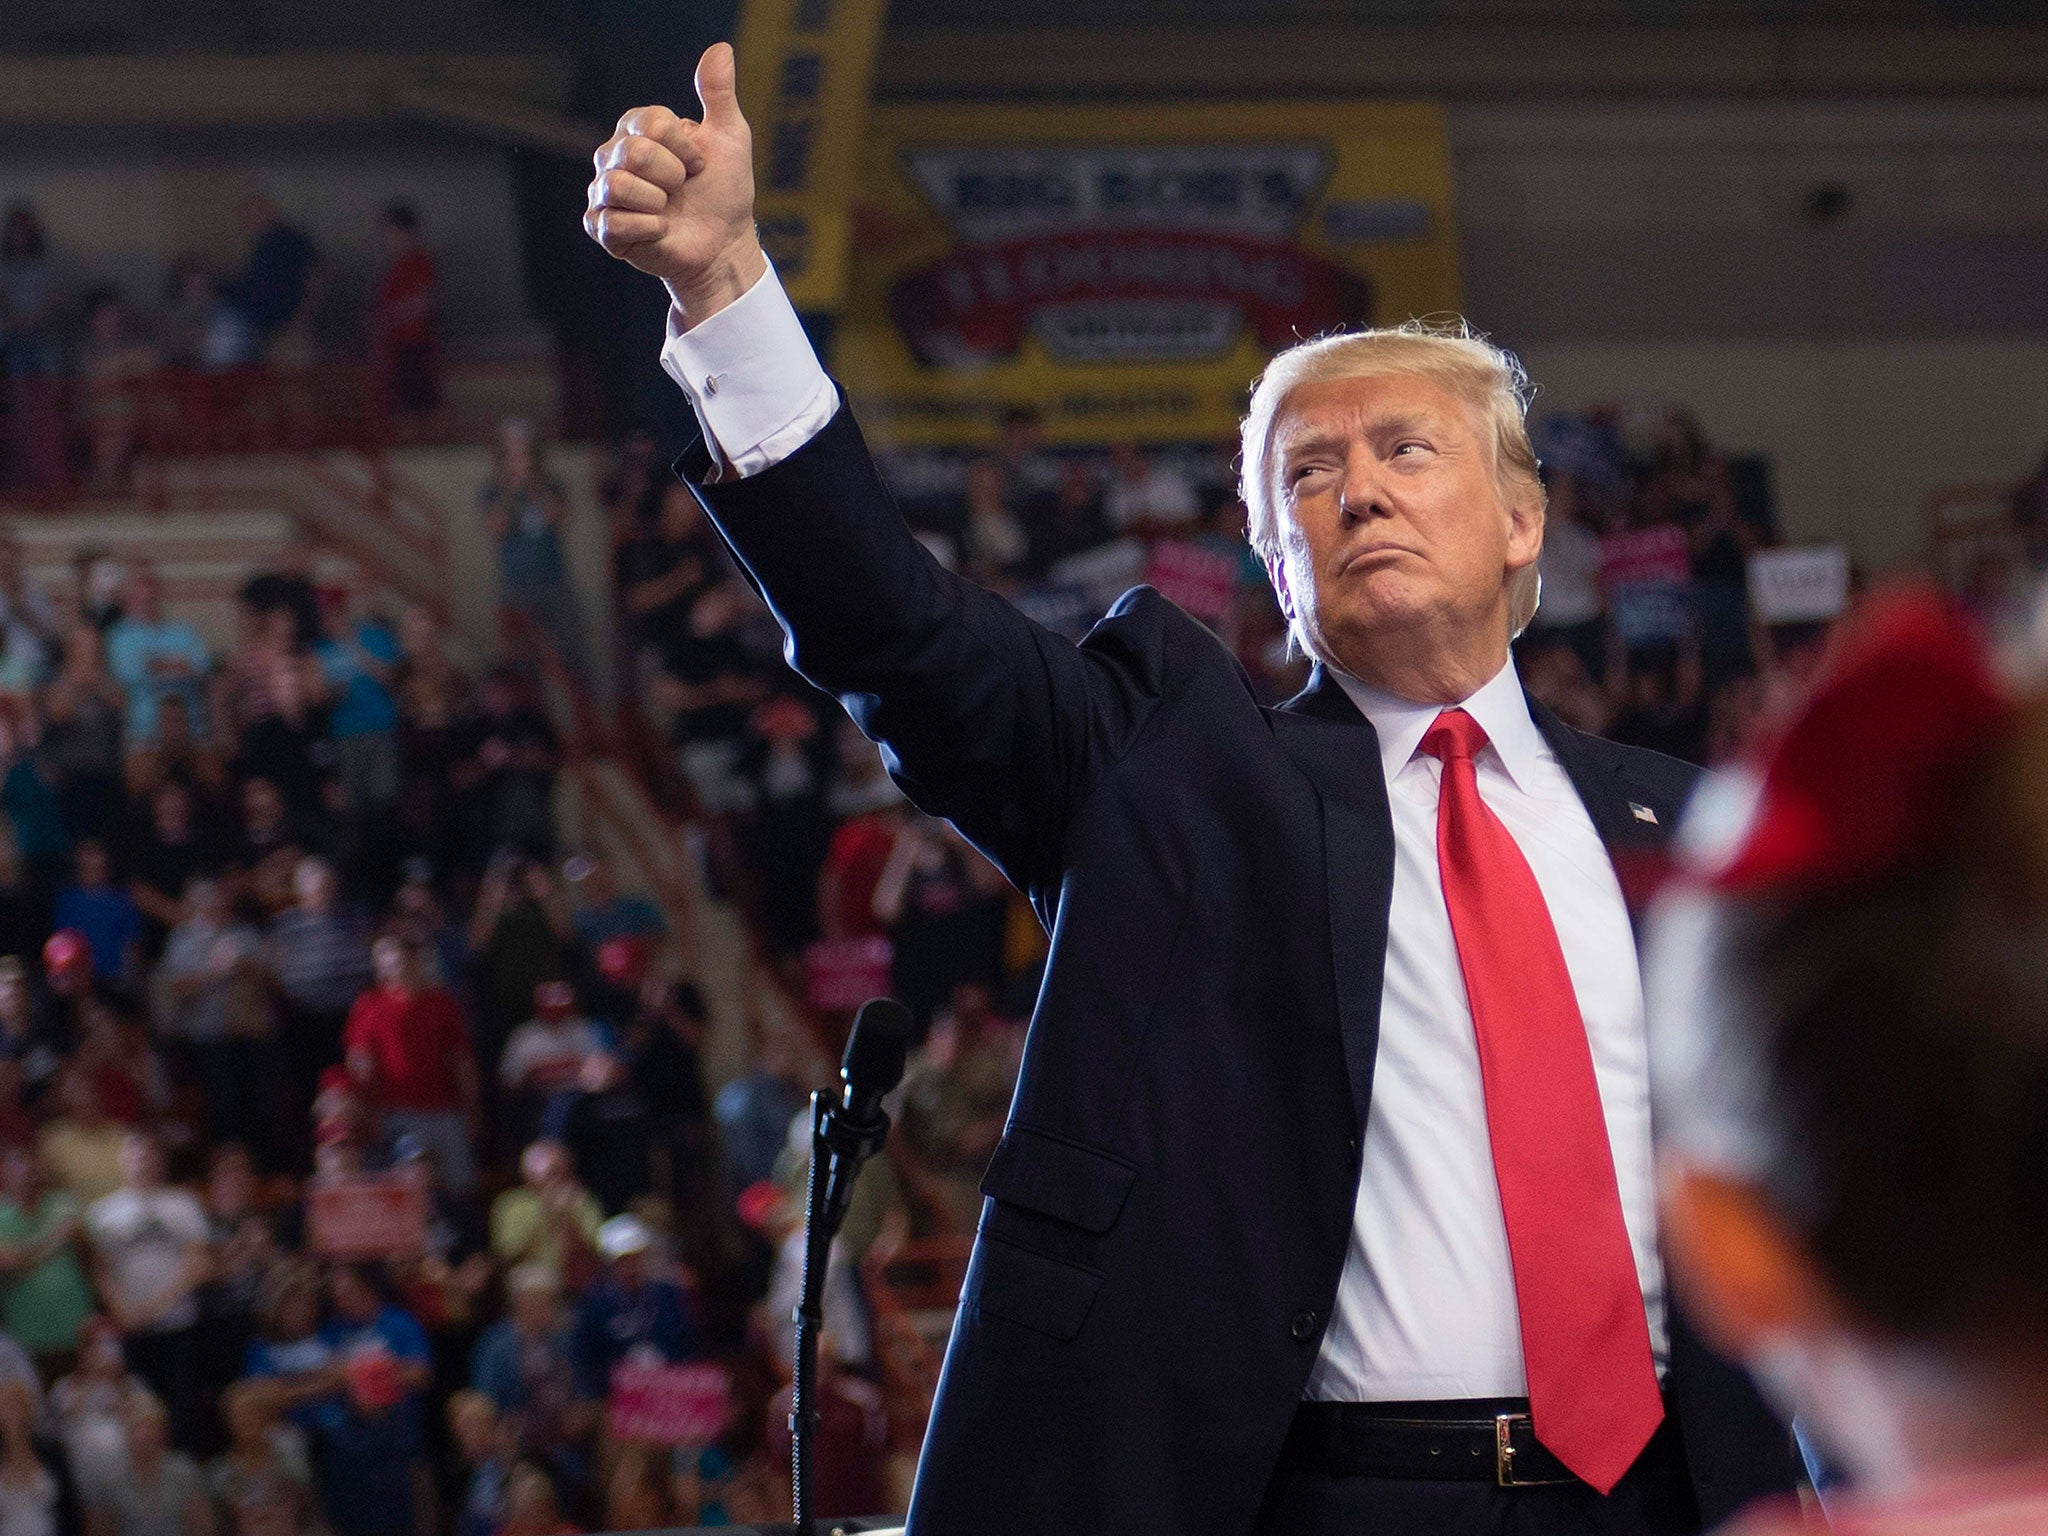 US President Donald Trump addresses a 'Make America Great Again' rally in Harrisburg